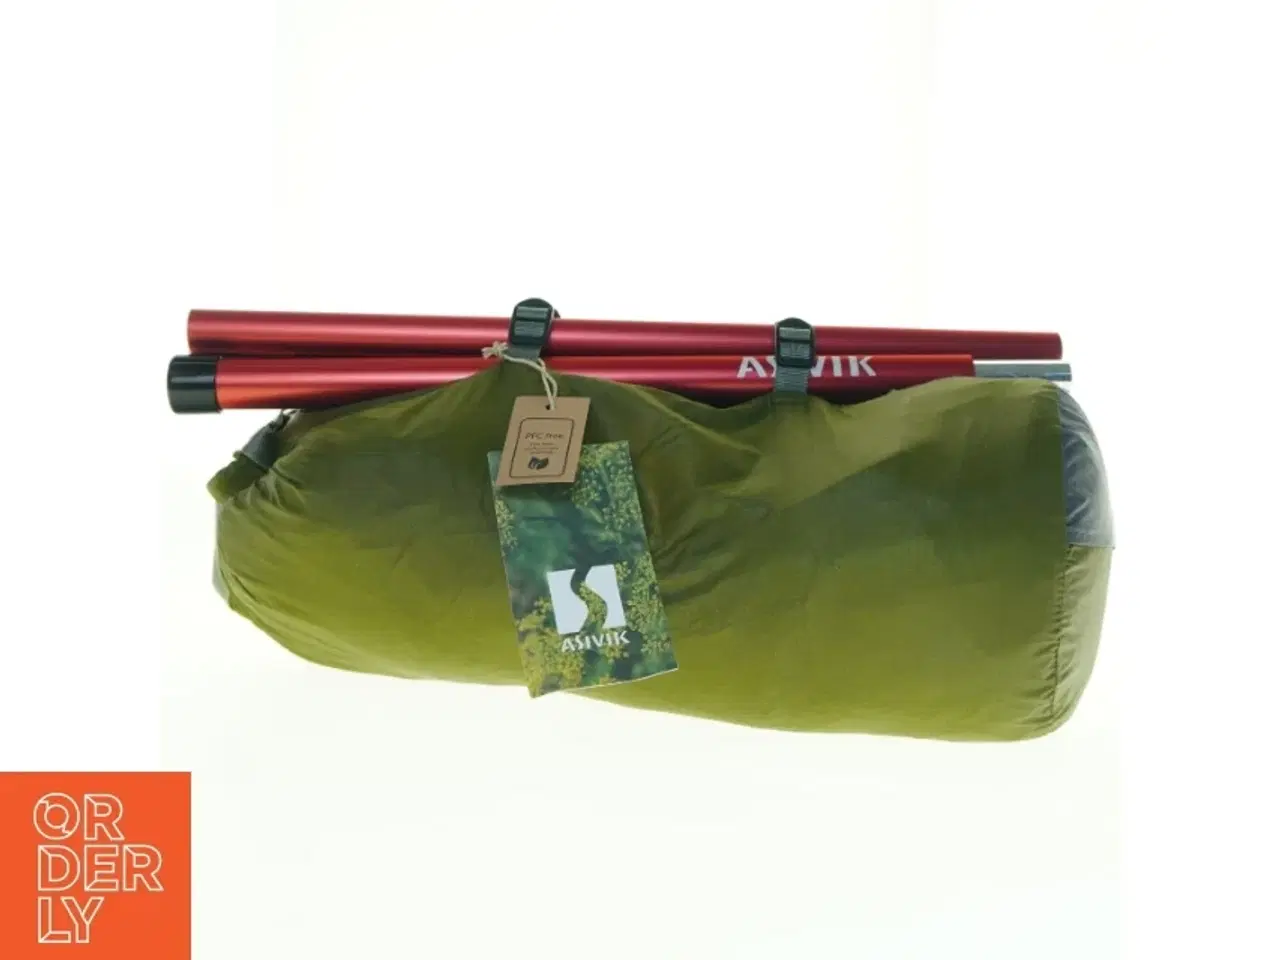 Billede 4 - Tipi/lavvu 3-pers.-telt fra Asivik  (str. Sammenpakket 35 x 20 cm)